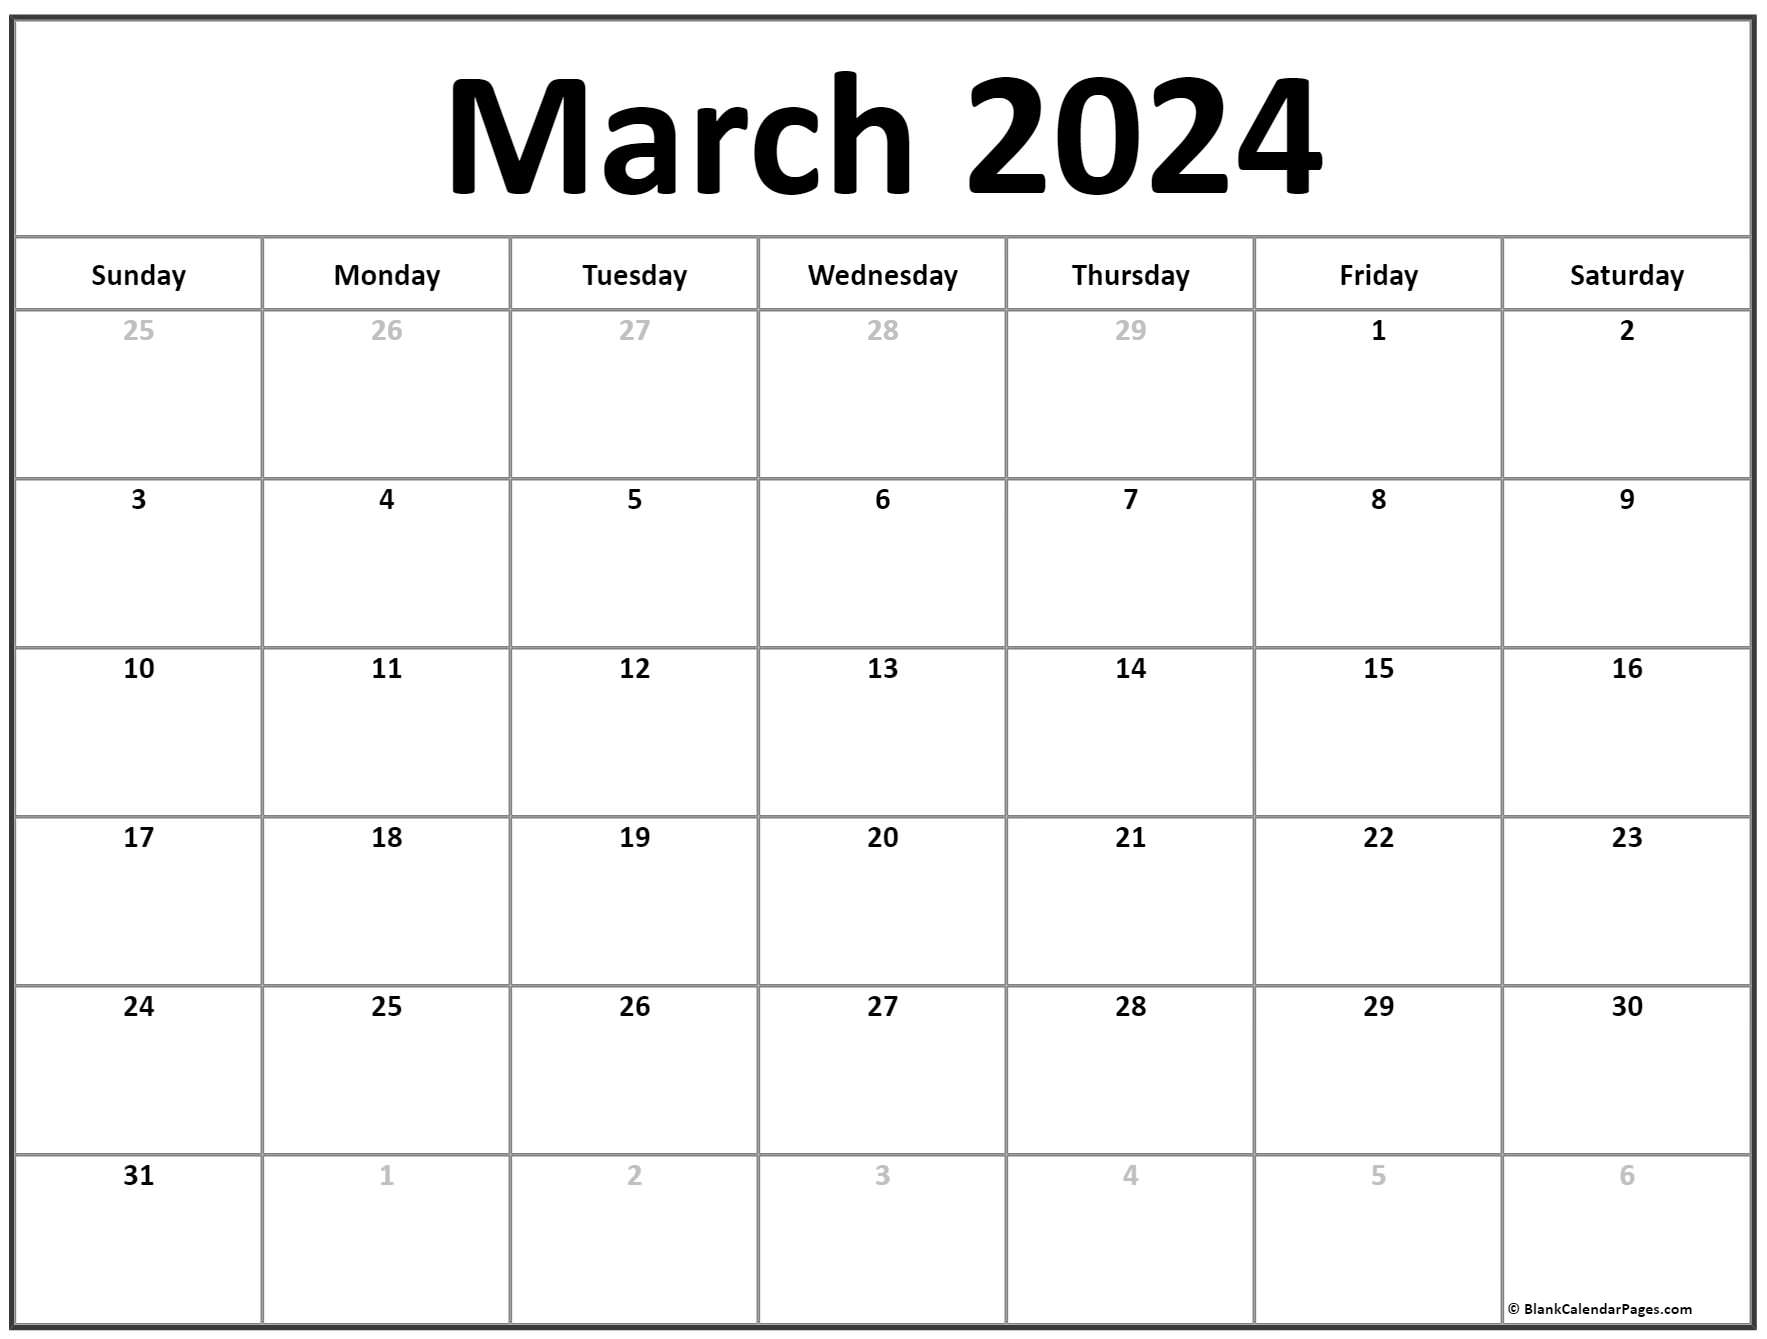 Солнечный календарь на март 2024 года